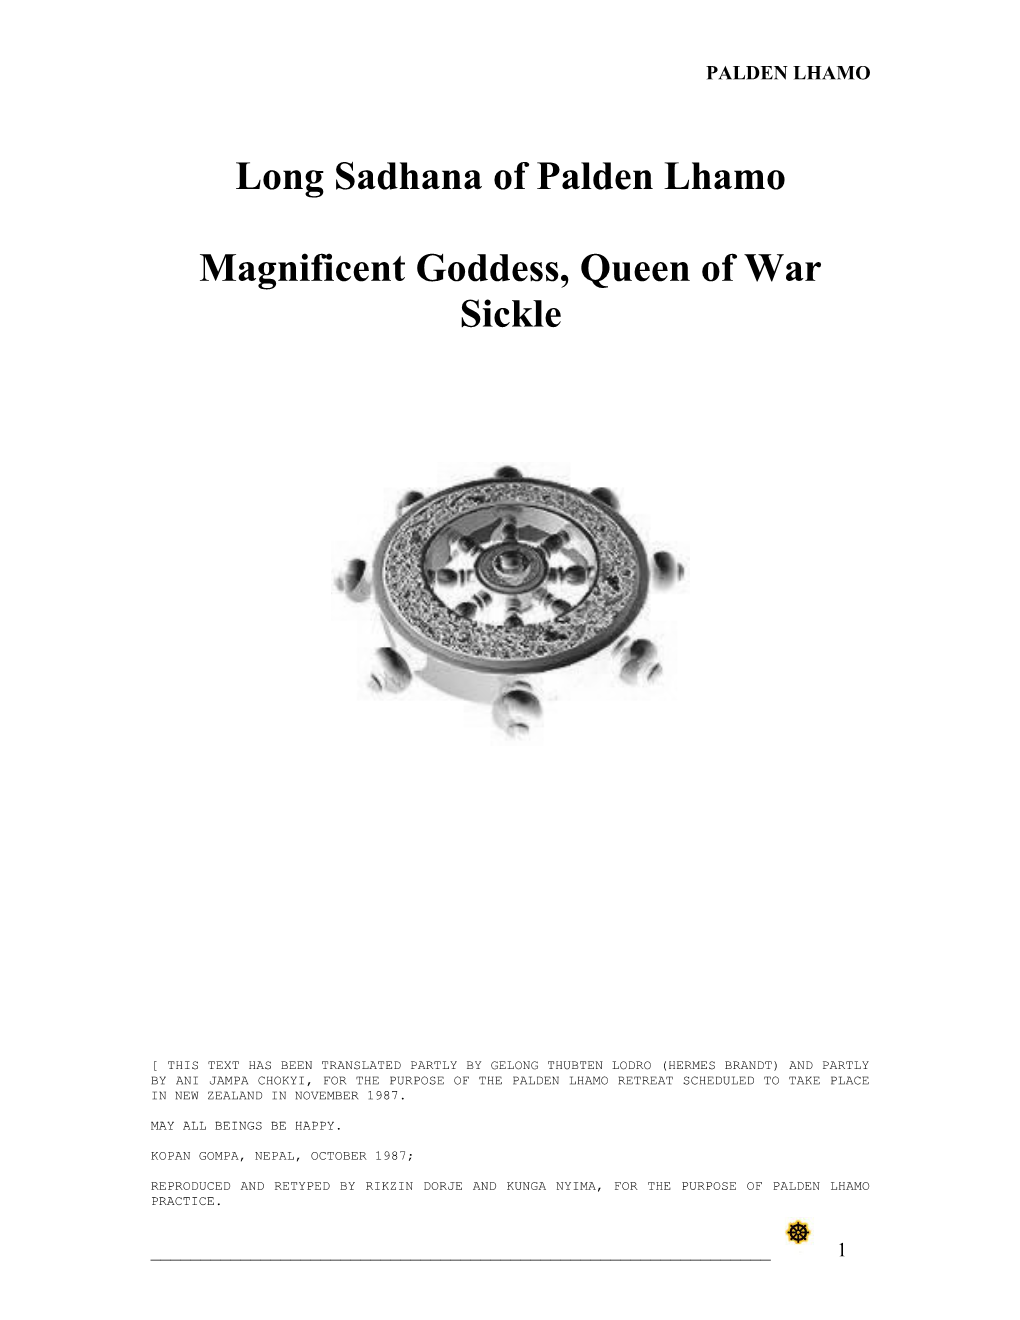 Long Saddhana of Palden Lhamo